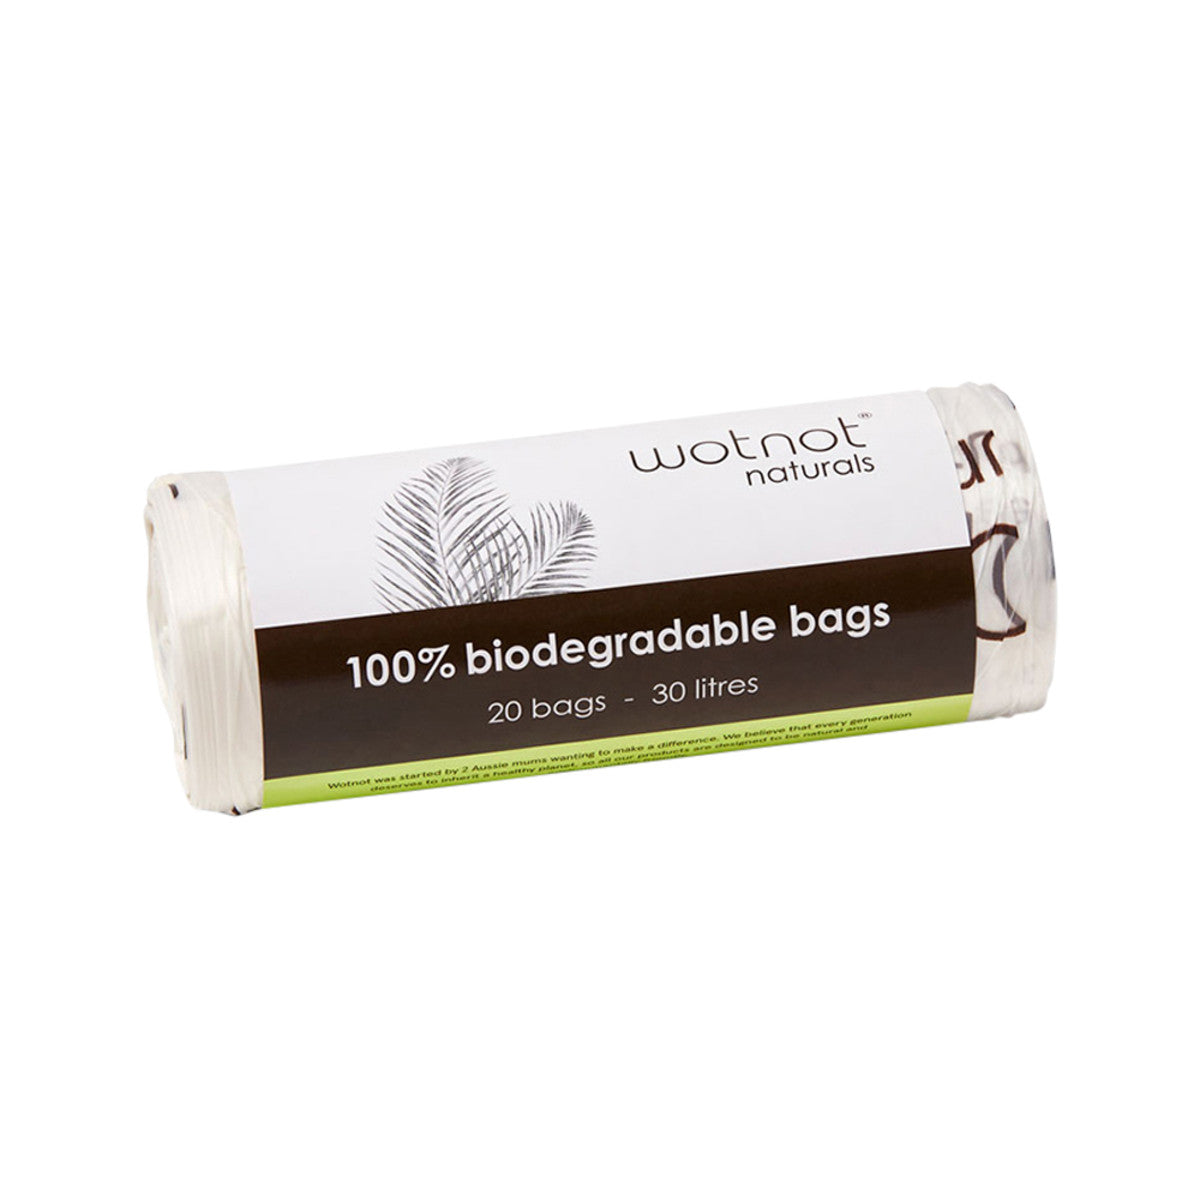 Wotnot Naturals Bin Nappy Bags 30L x 20 Bags, 100% Biodegradeable